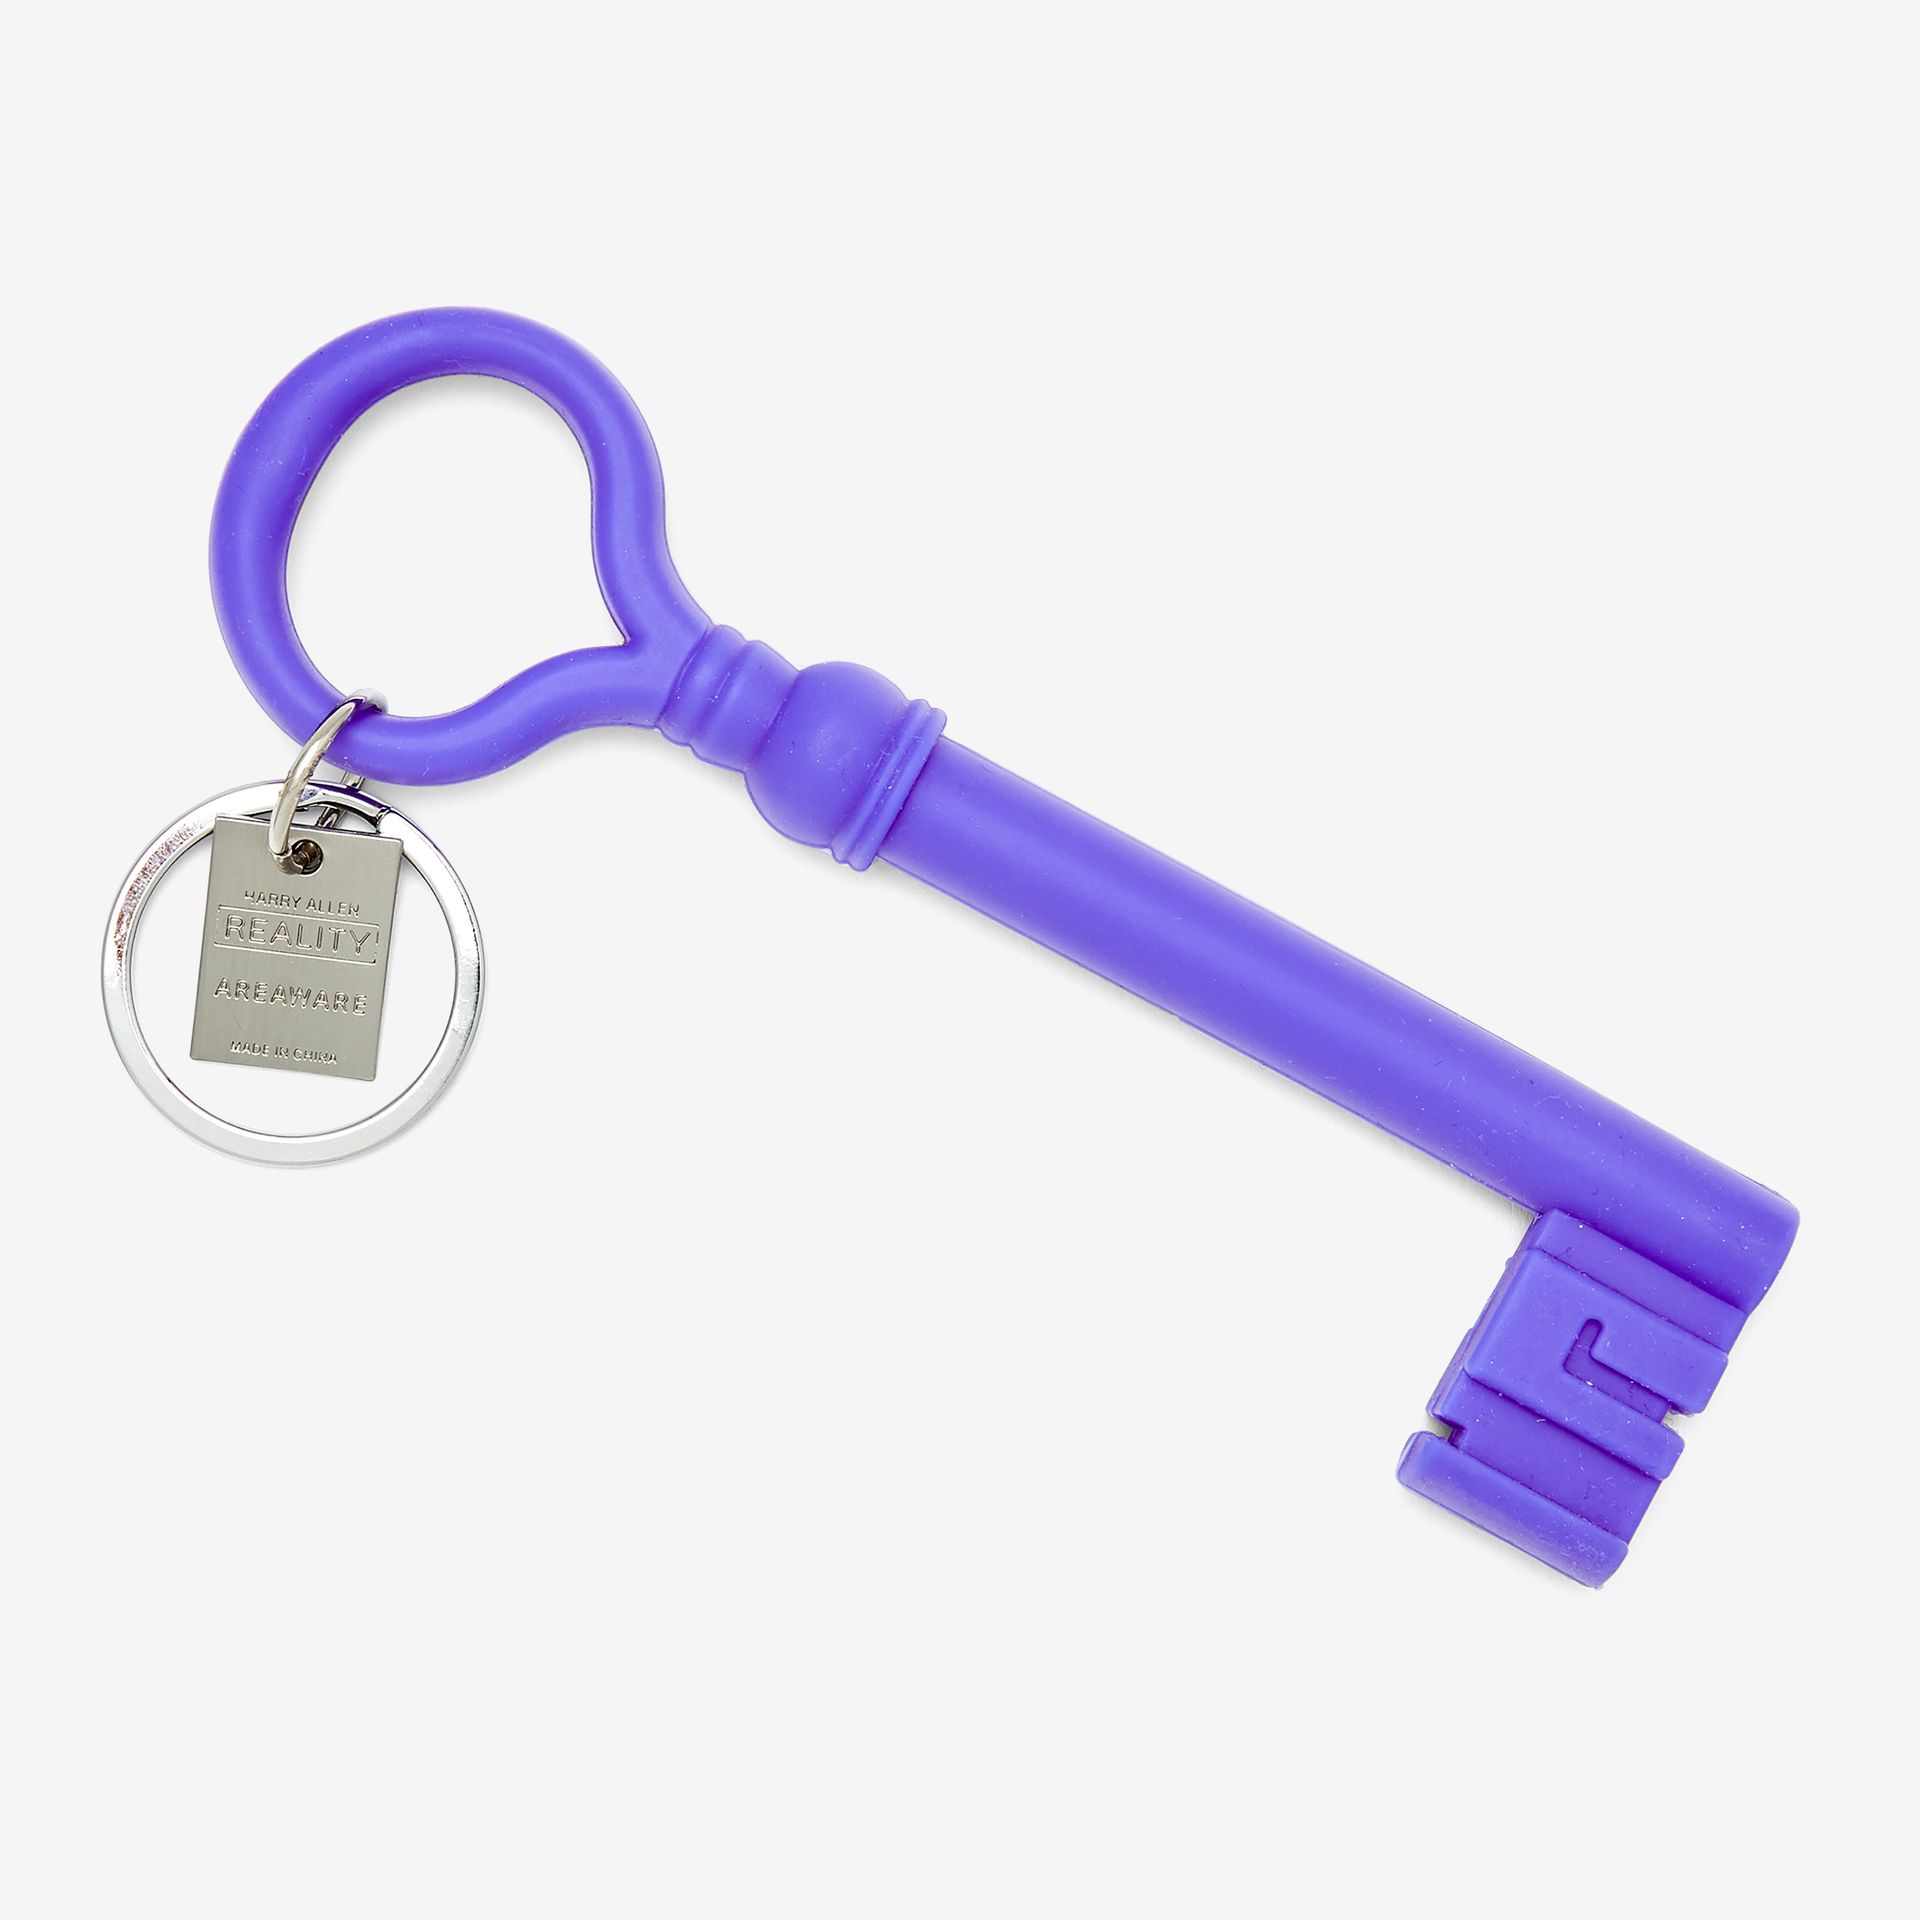 Harry Allen keychain key